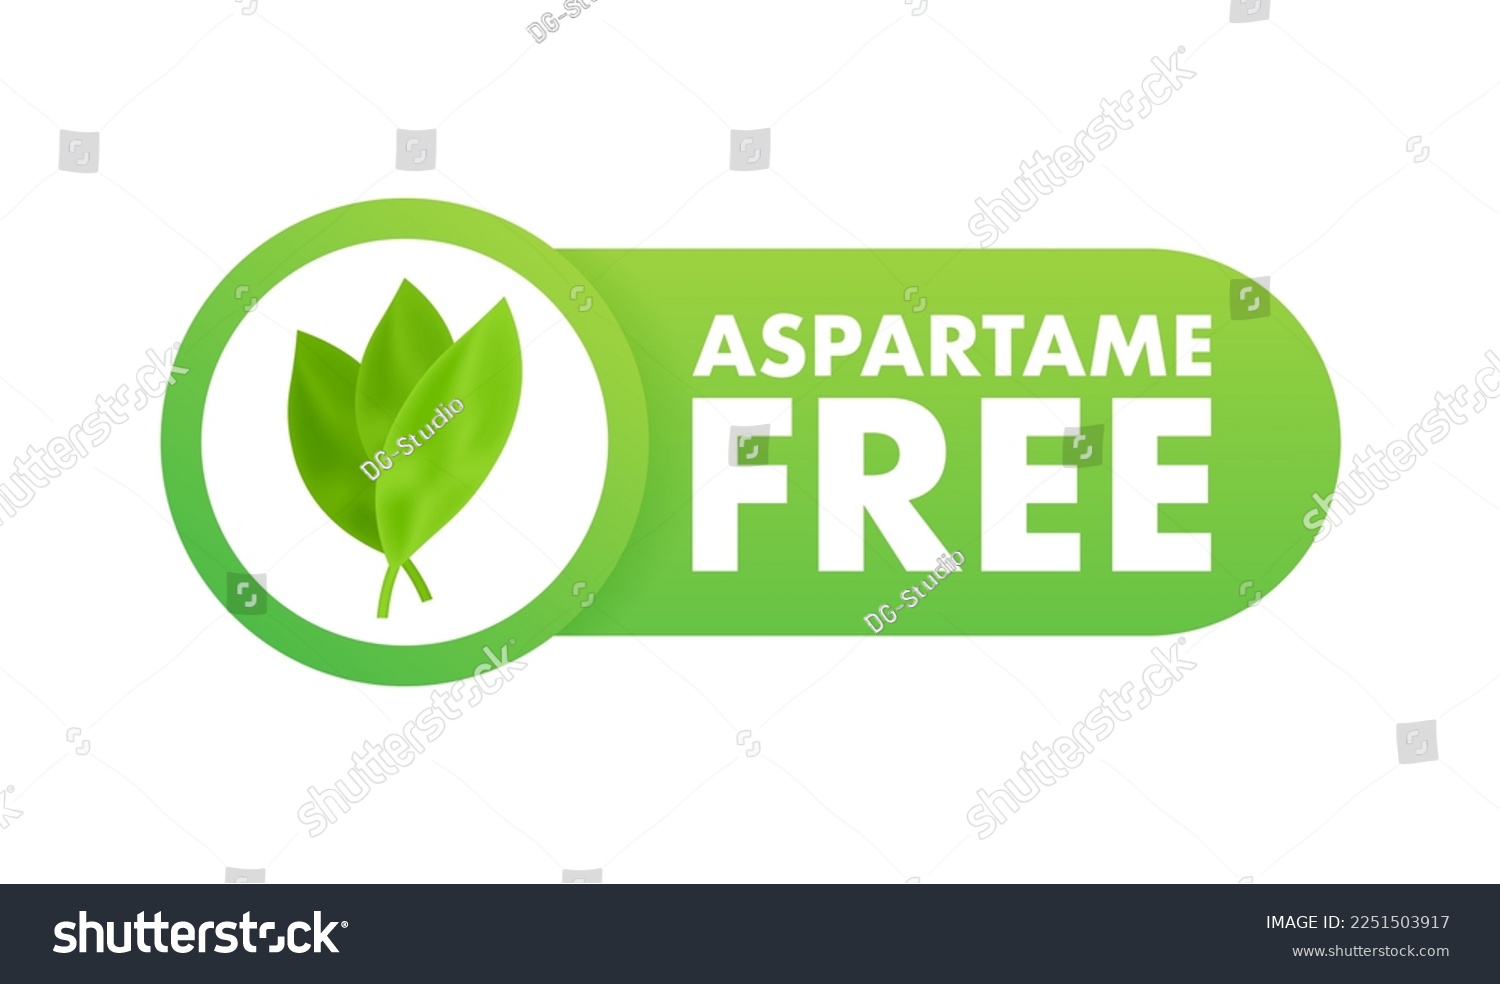 SVG of Aspartame free icon, label. Aspartame artificial sweetener free. Vector stock illustration. svg